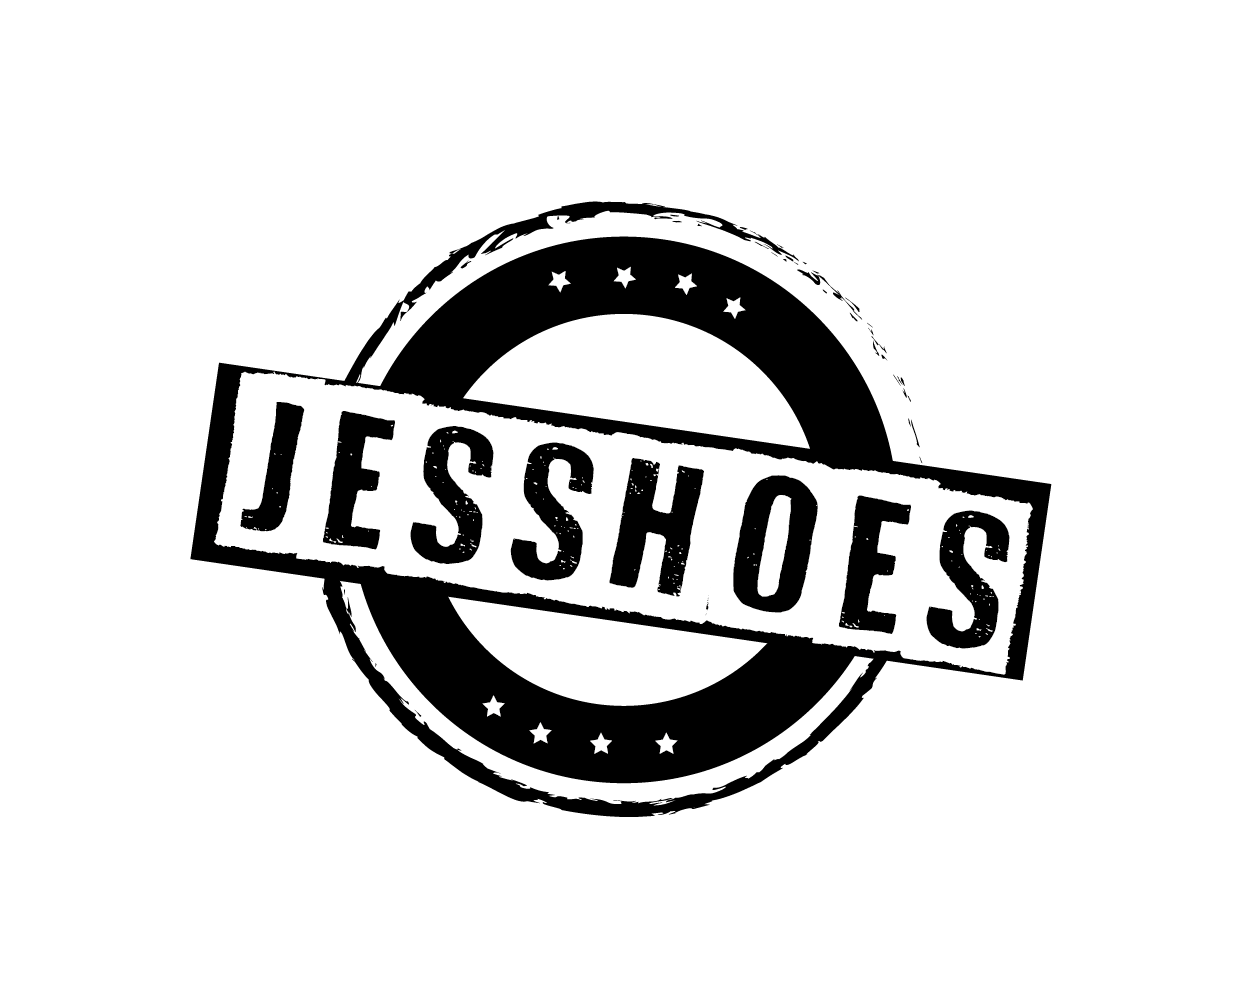 (c) Jesshoes.nl